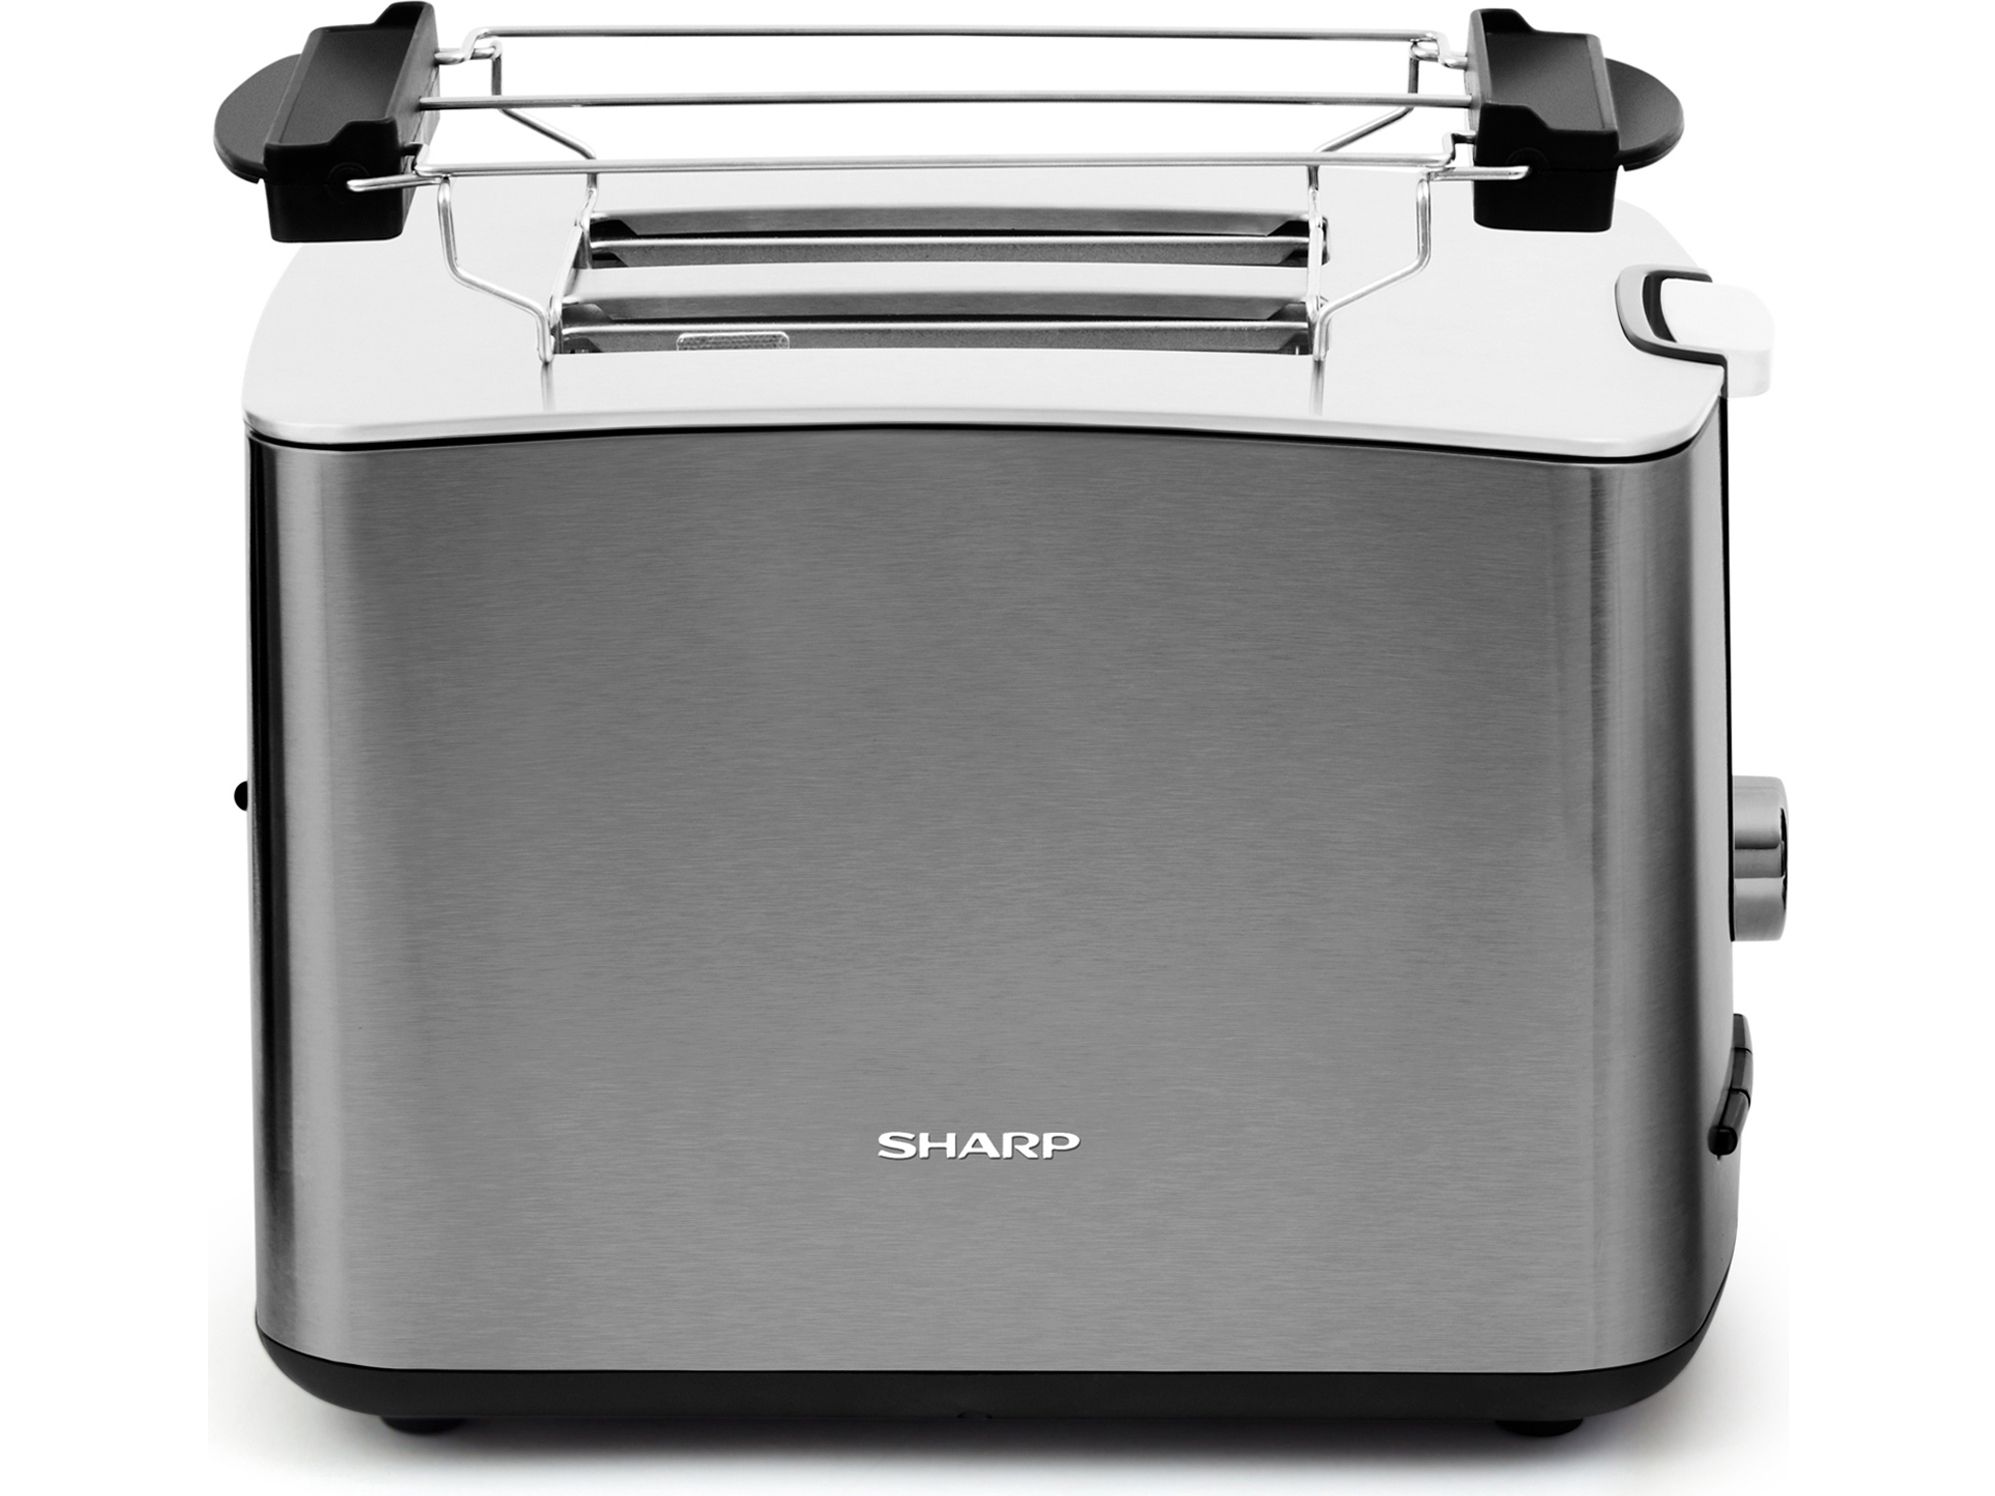 sharp-toaster-sact2002aeu